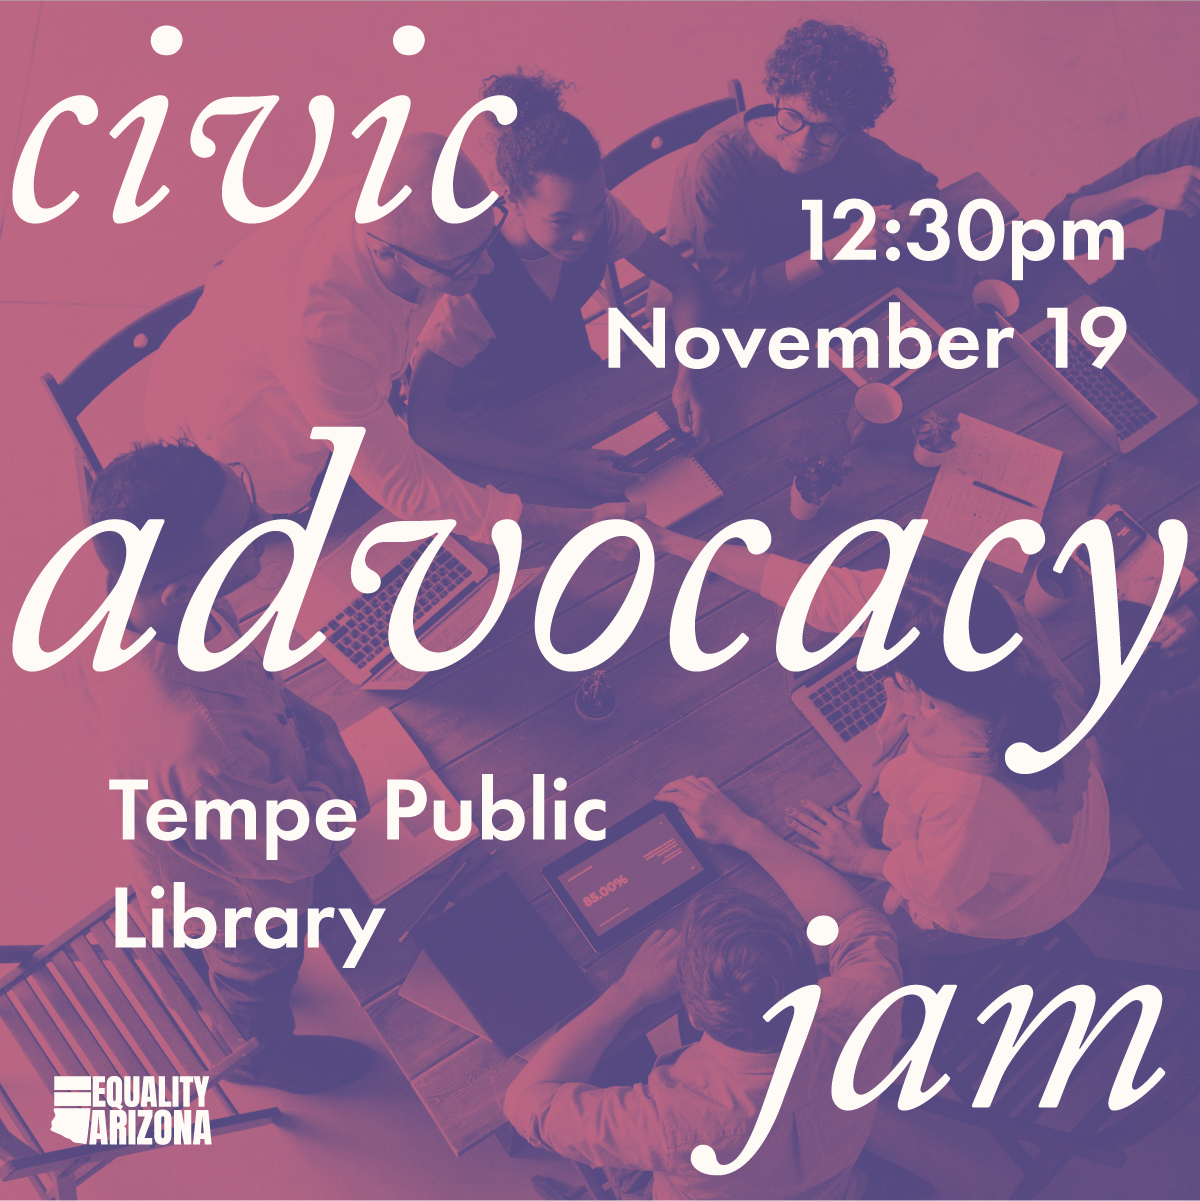 Civic Advocacy Jam. Tempe Public Library. 11:30am November 19.